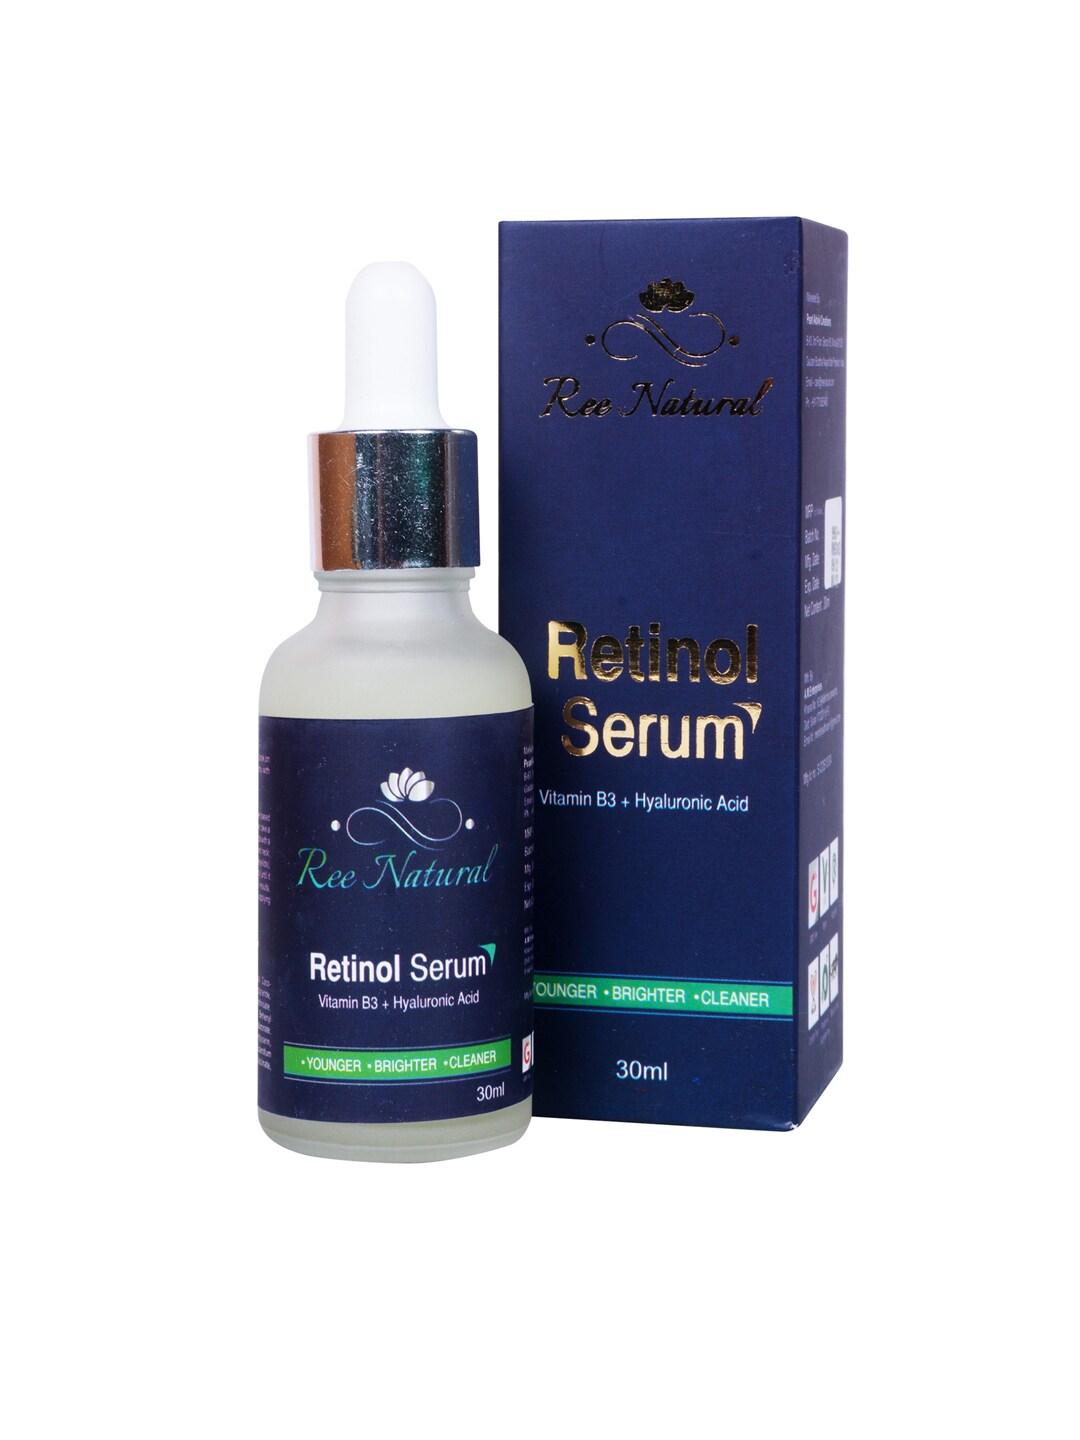 Ree Natural Retinol Serum 30ml